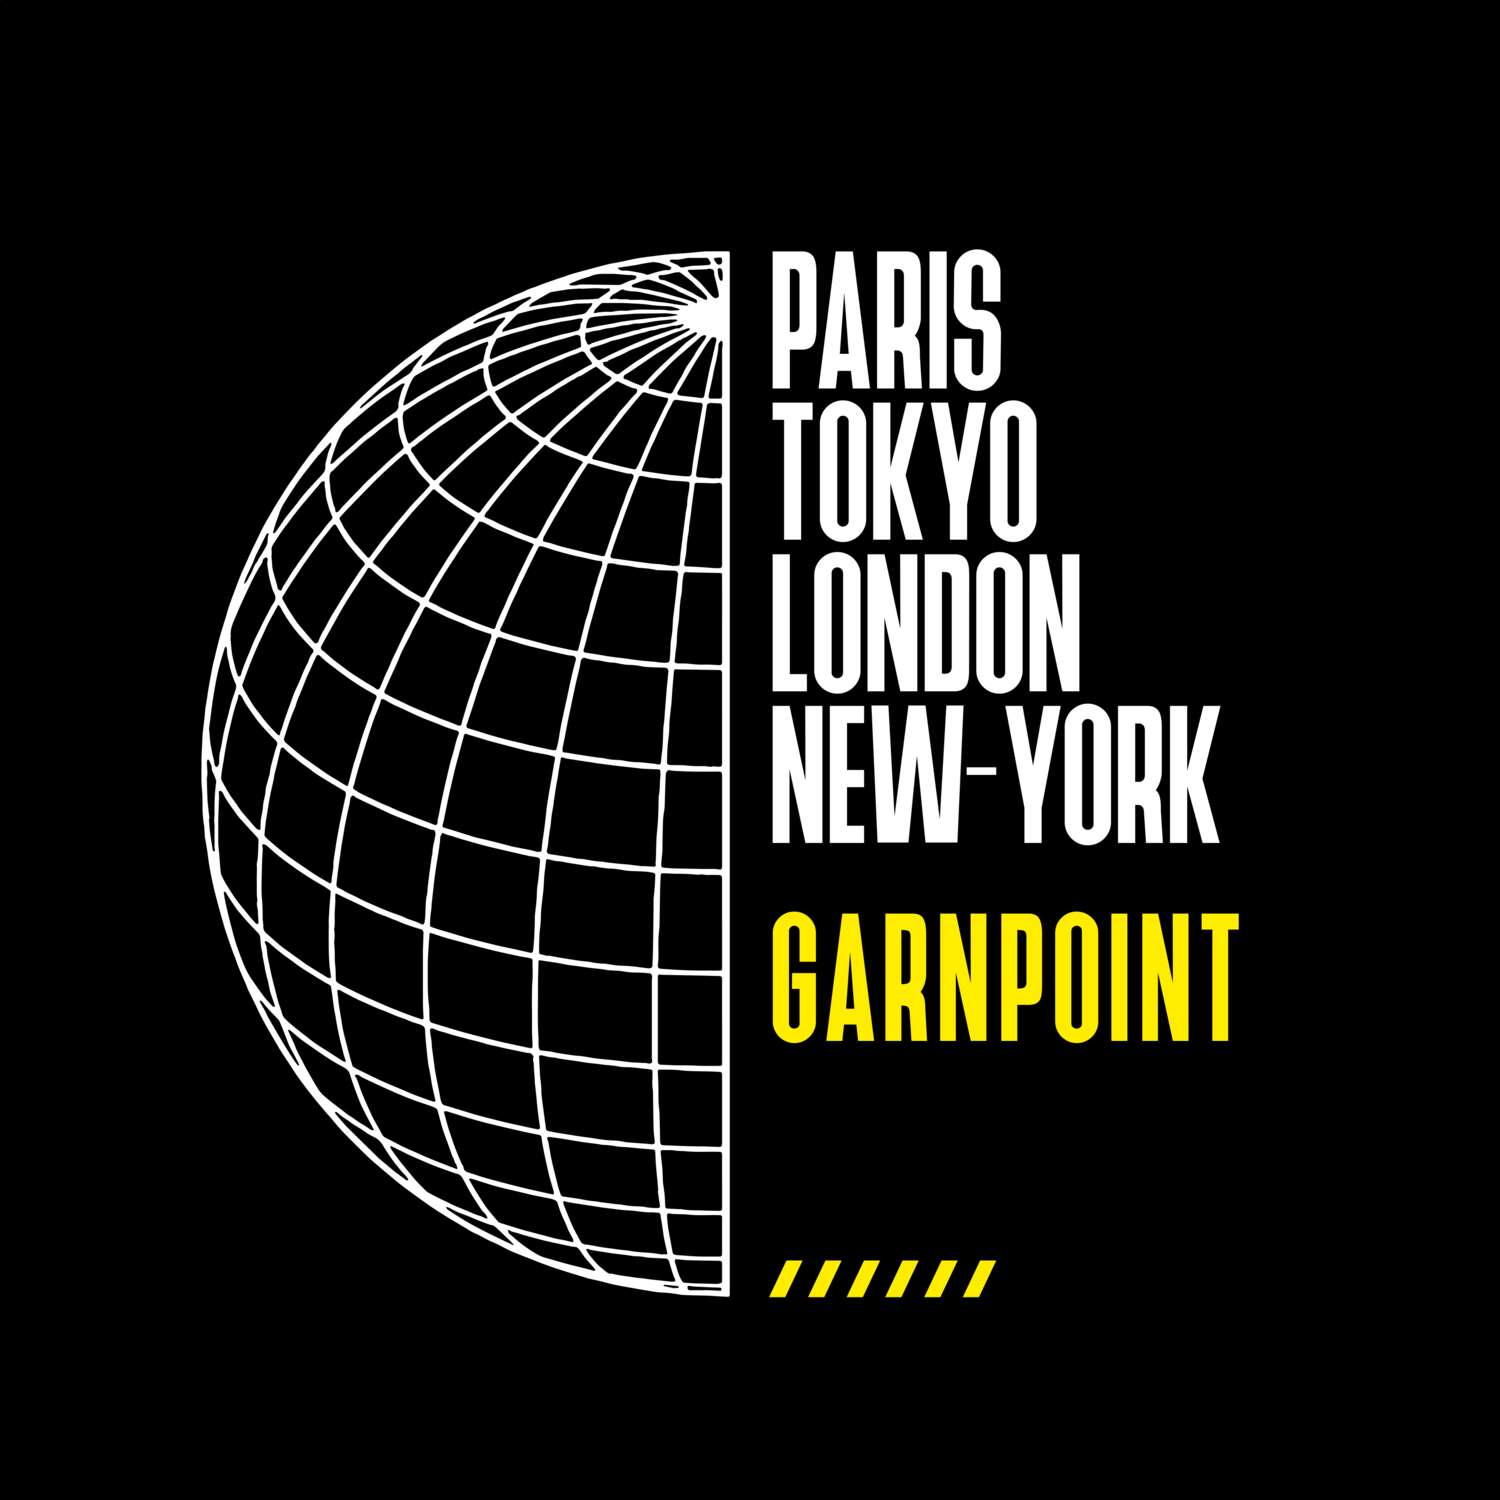 Garnpoint T-Shirt »Paris Tokyo London«